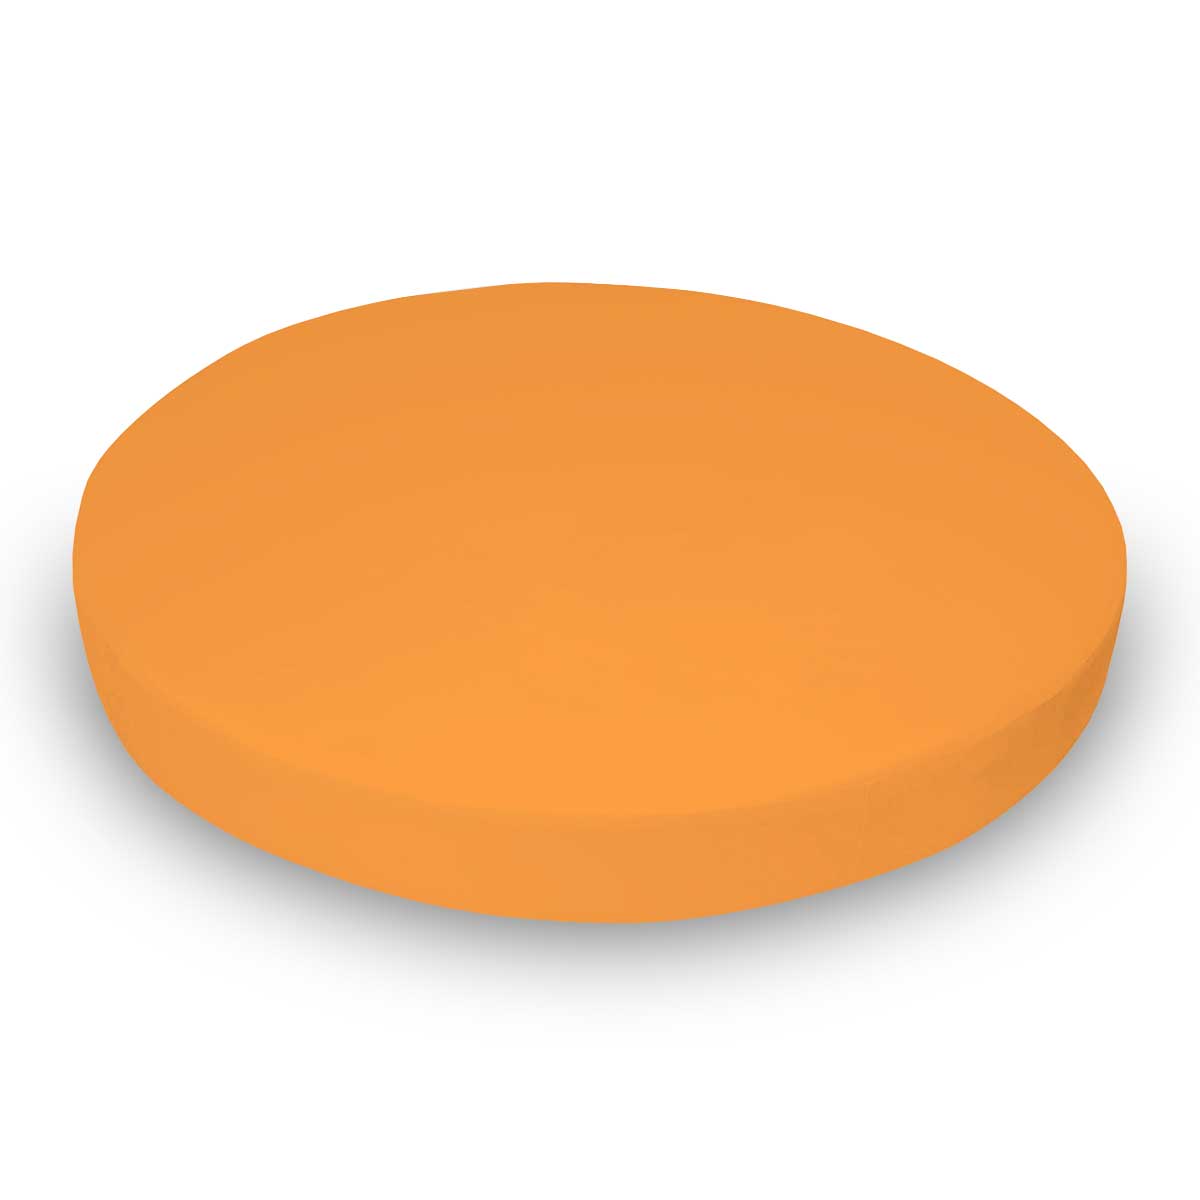 Oval Crib (Stokke Sleepi) - Solid Orange Jersey Knit - Fitted  Oval